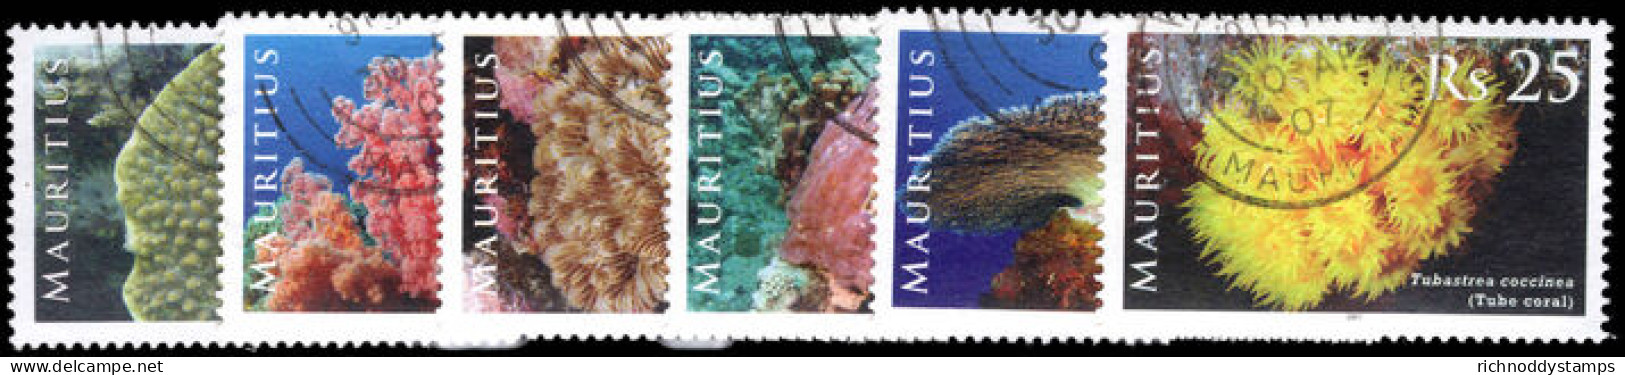 Mauritius 2004 Corals Fine Used. - Maurice (1968-...)